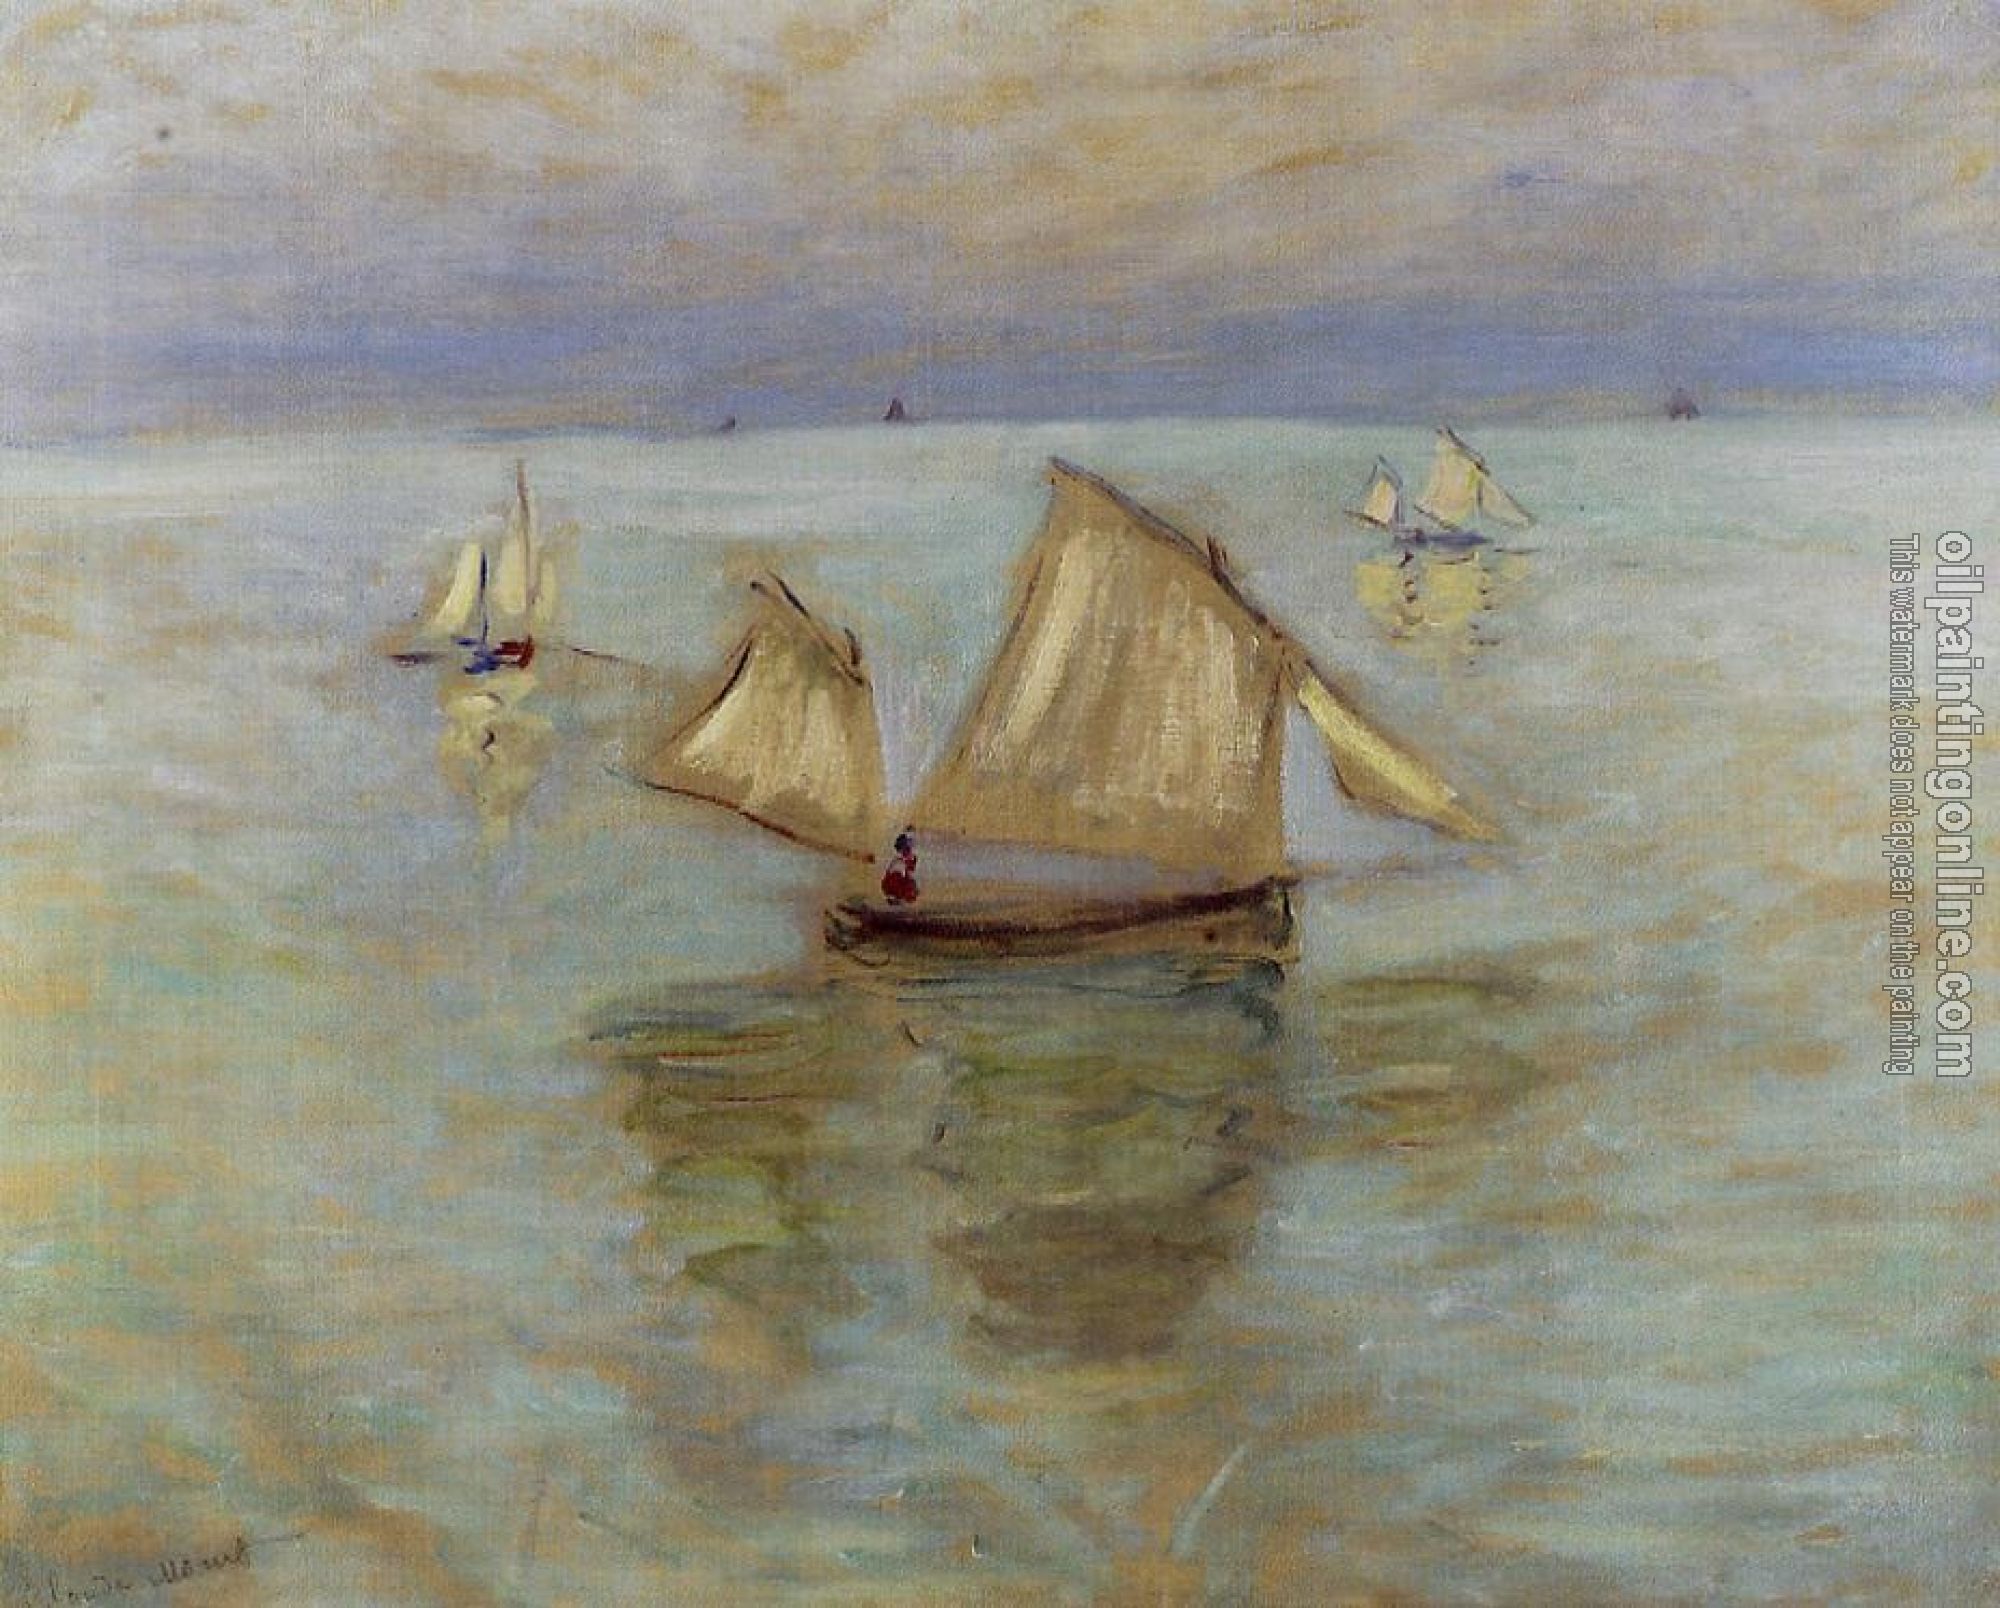 Monet, Claude Oscar - Fishing Boats at Pourville